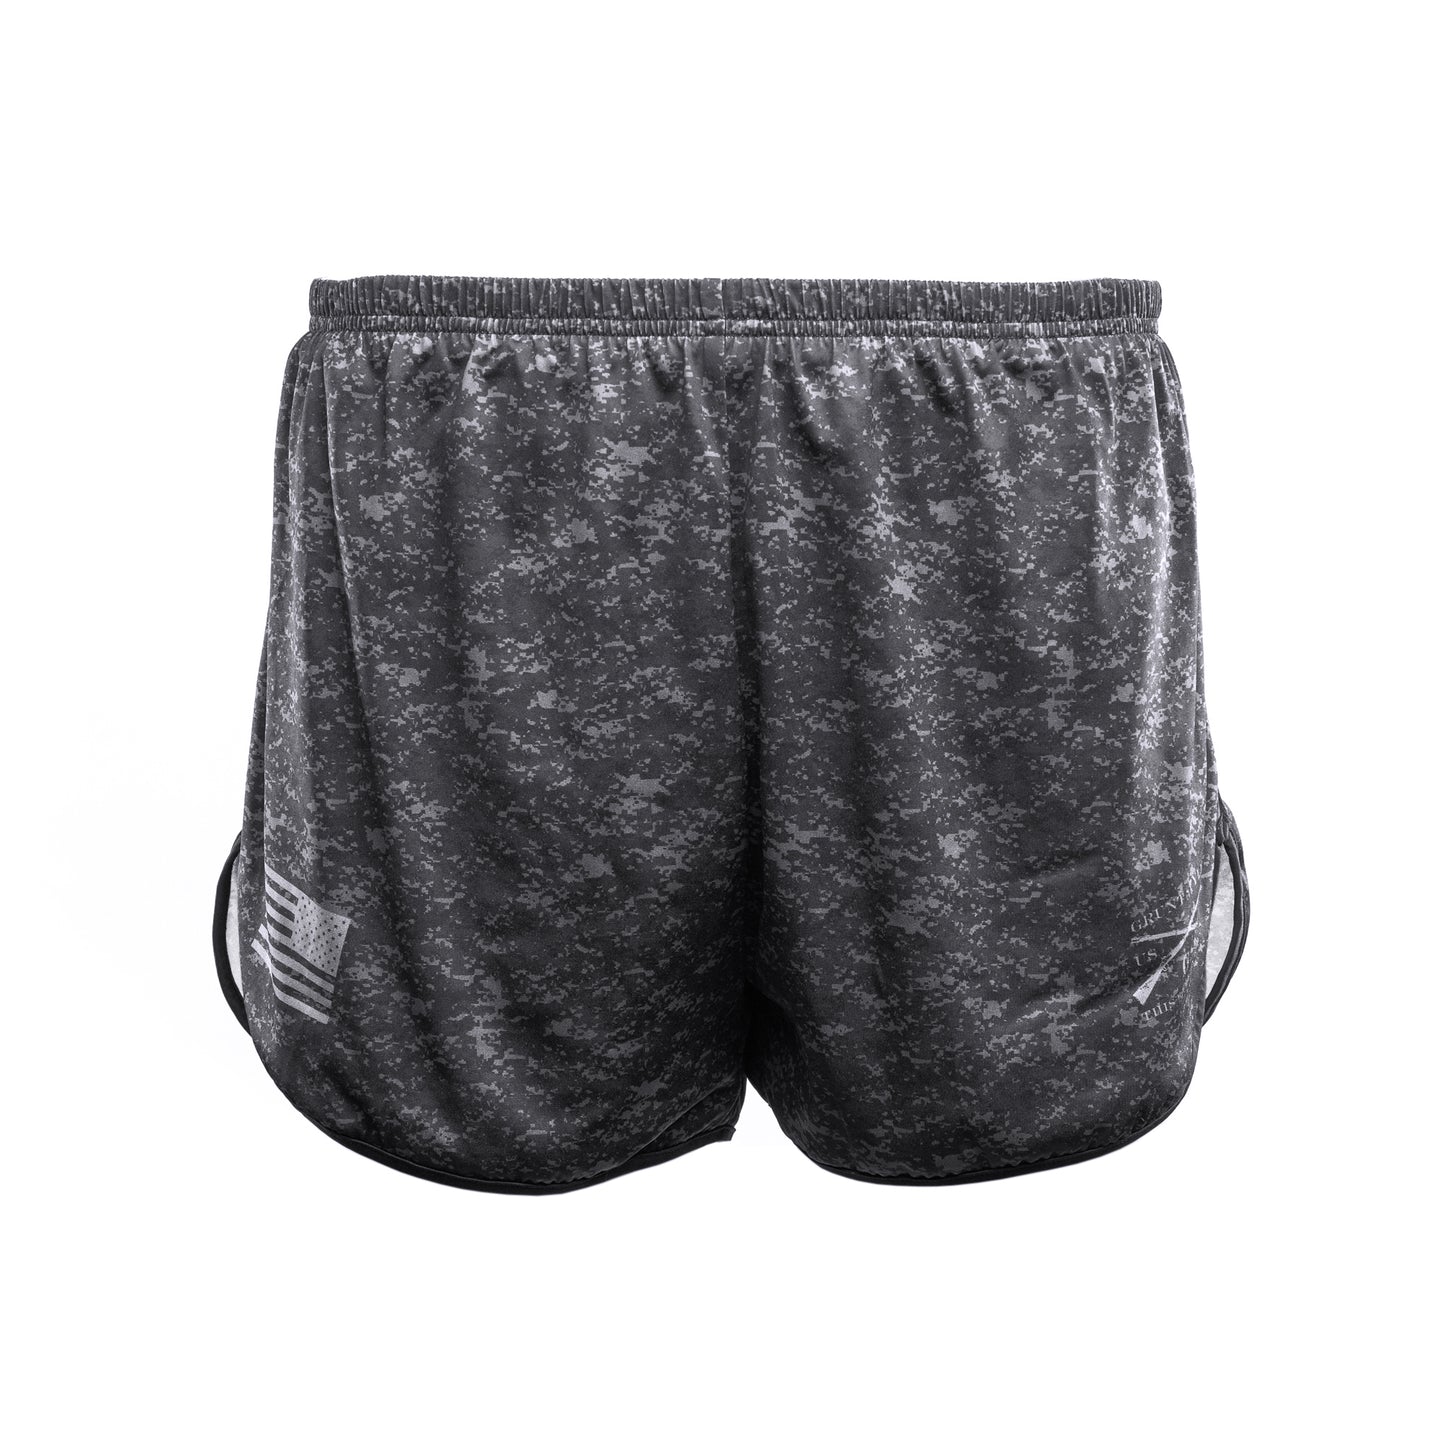 Ranger Panties for Men - Black Digi Camo | Grunt Style 